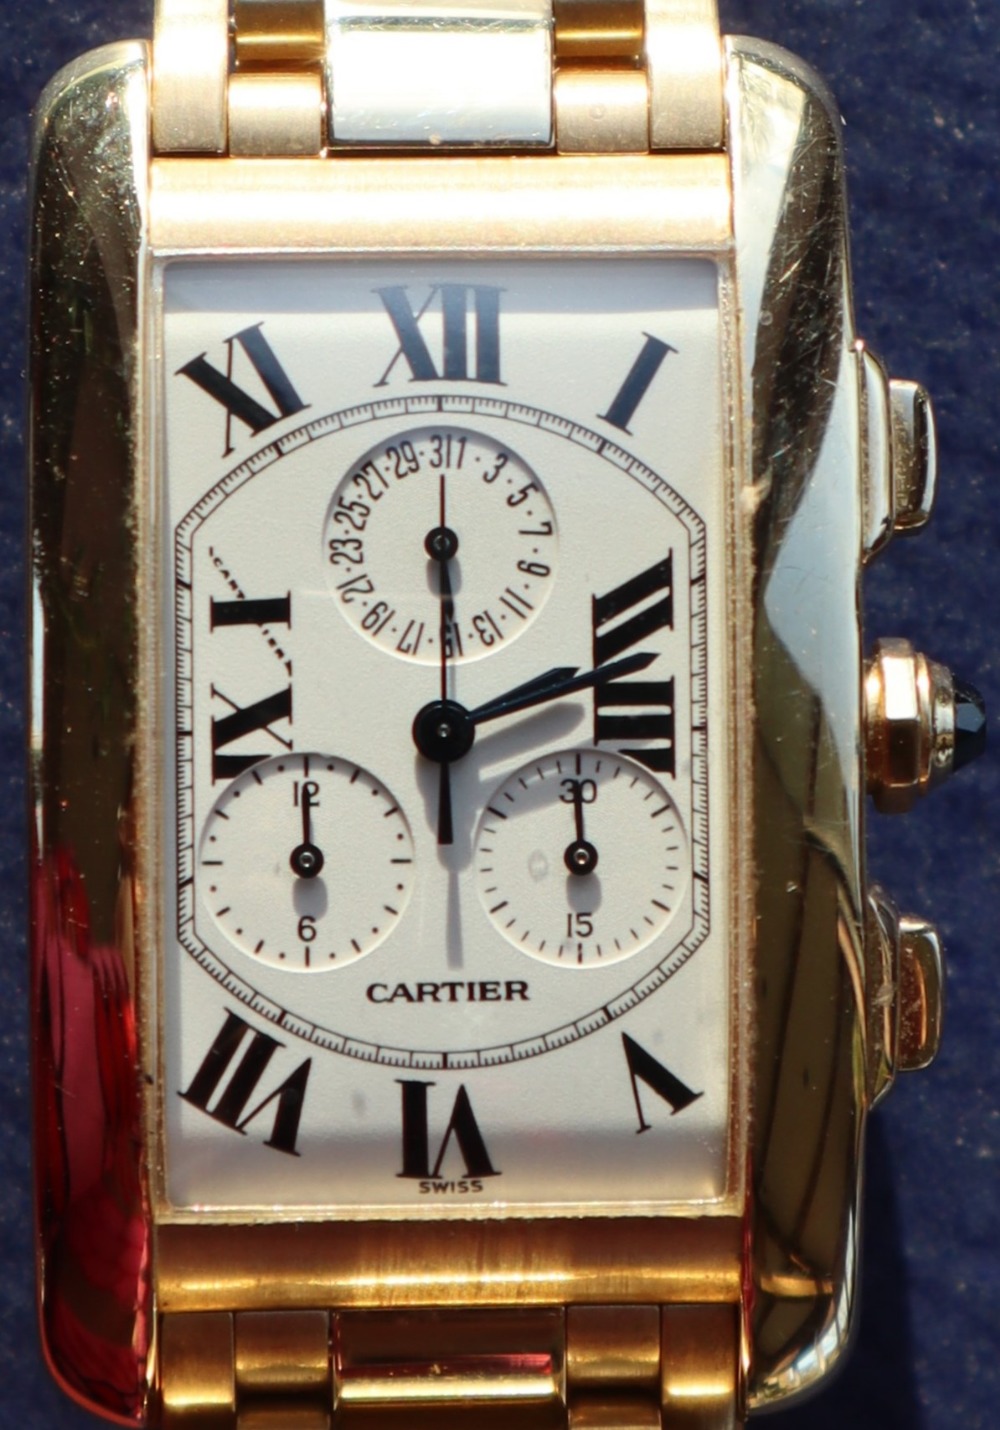 Cartier - An 18K gold quartz Tank Américaine calendar chronograph bracelet watch, Reference, 1730, - Image 7 of 7